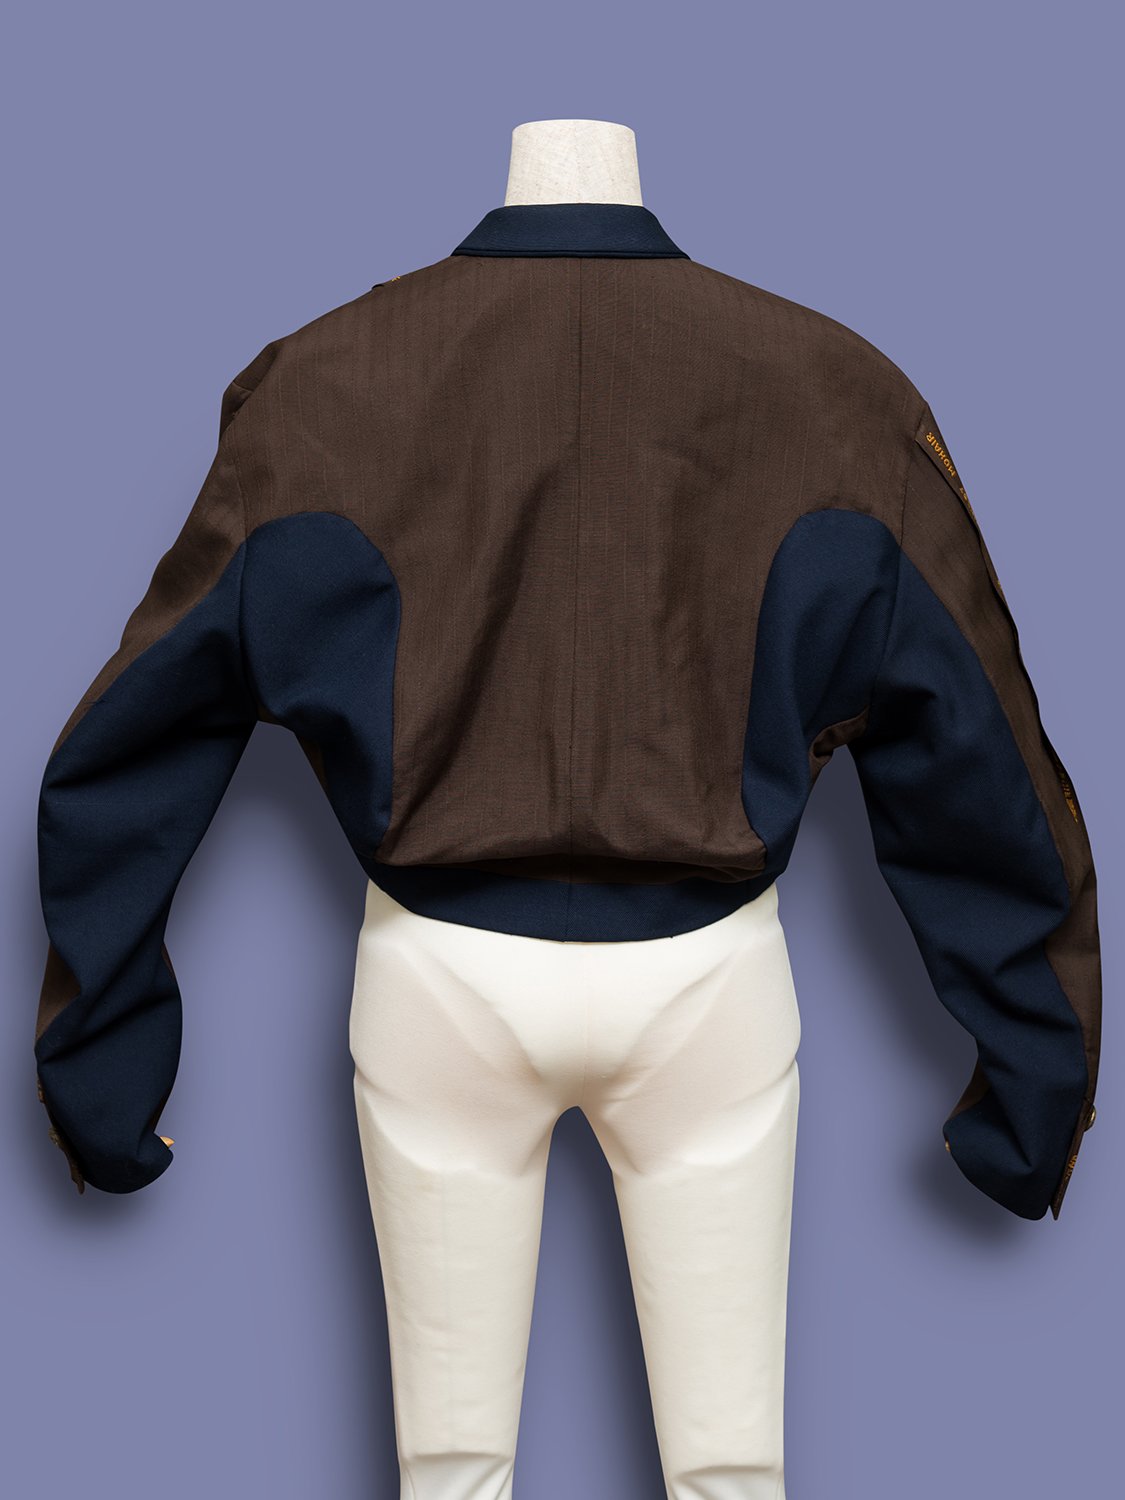 Nemeth 1980s/1990s Coat & Pants  Japanese fashion, Coat pant, Fashion 2000s